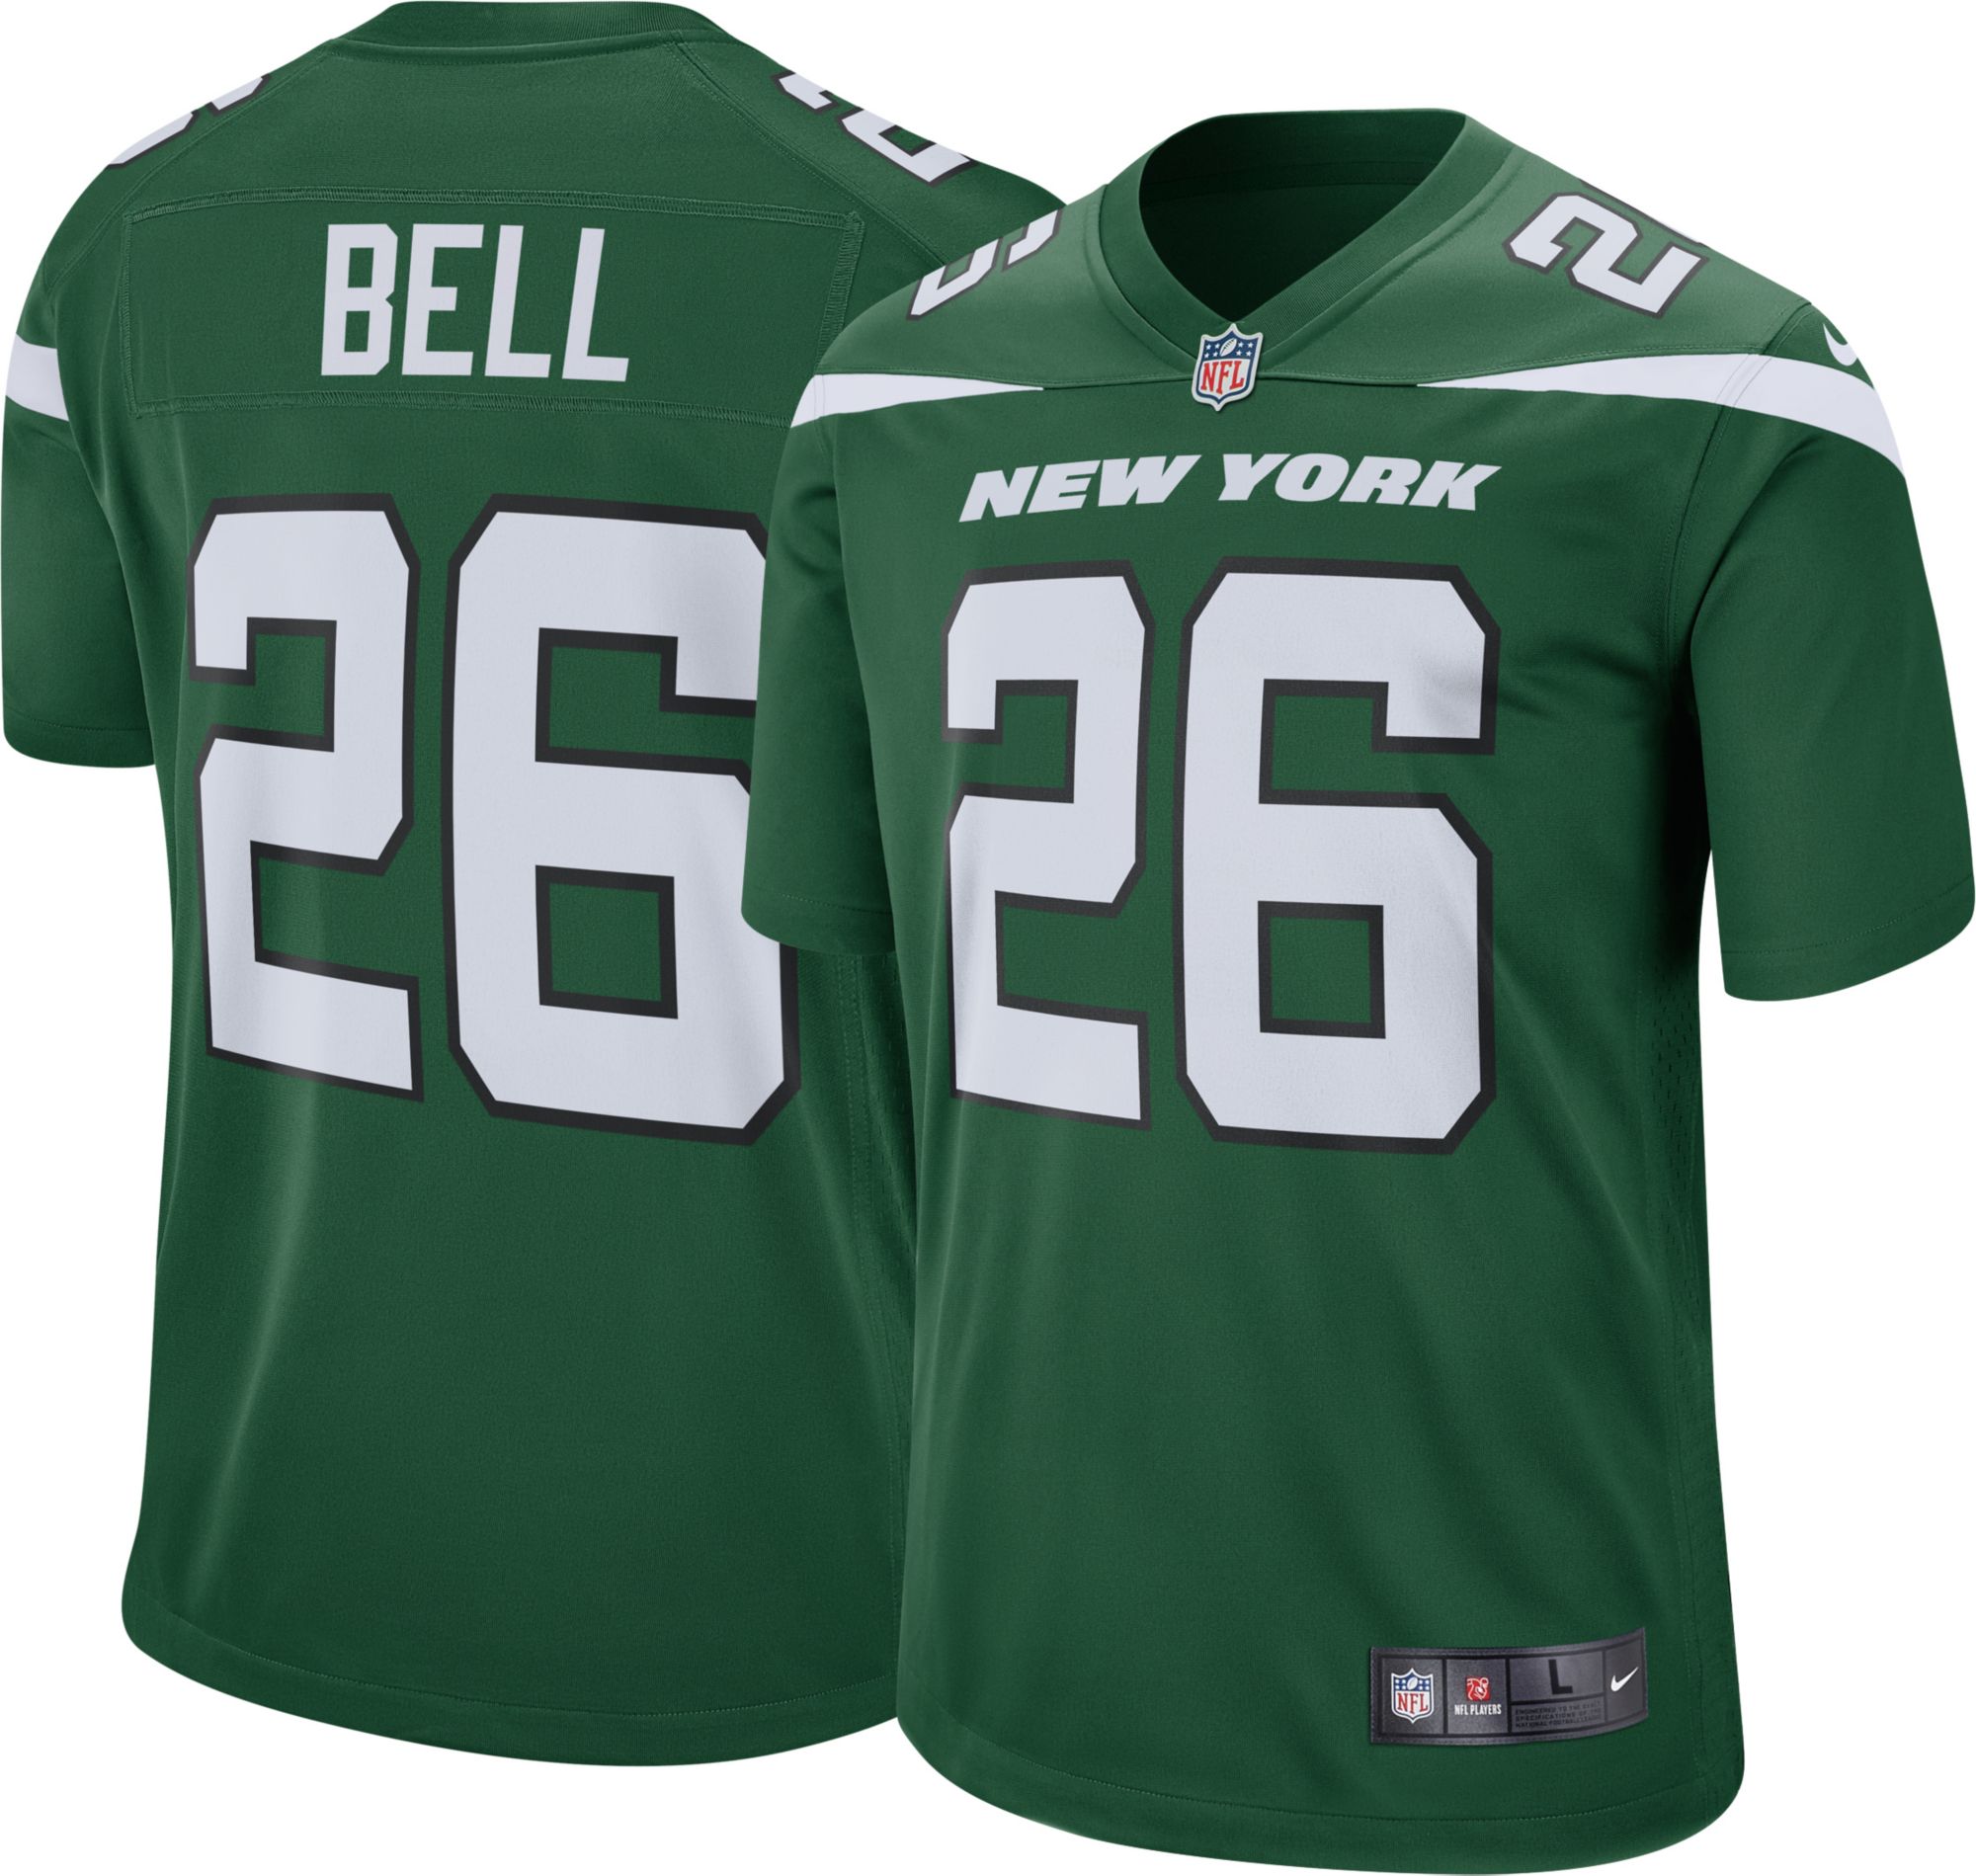 New York Jets Jerseys | Curbside Pickup 